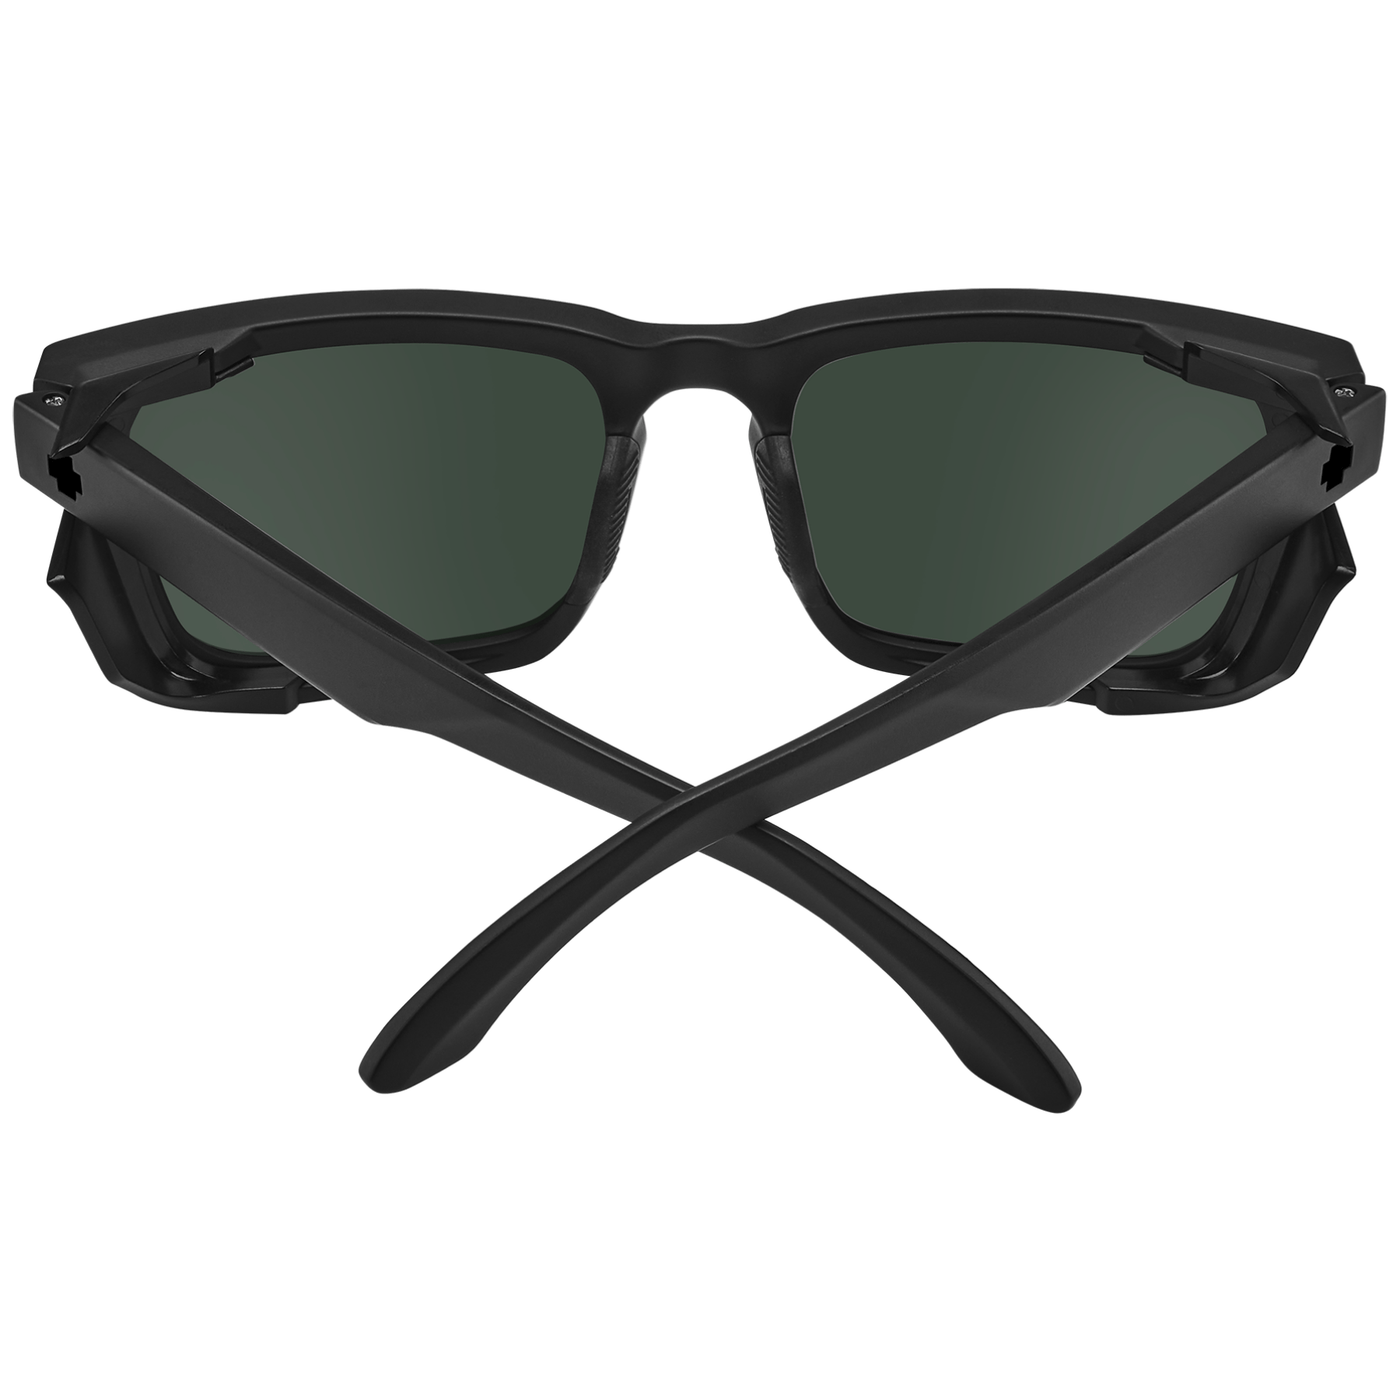 SPY HELM TECH Polarized Sunglasses, Happy Lens - Gray/Green 8Lines Shop - Fast Shipping